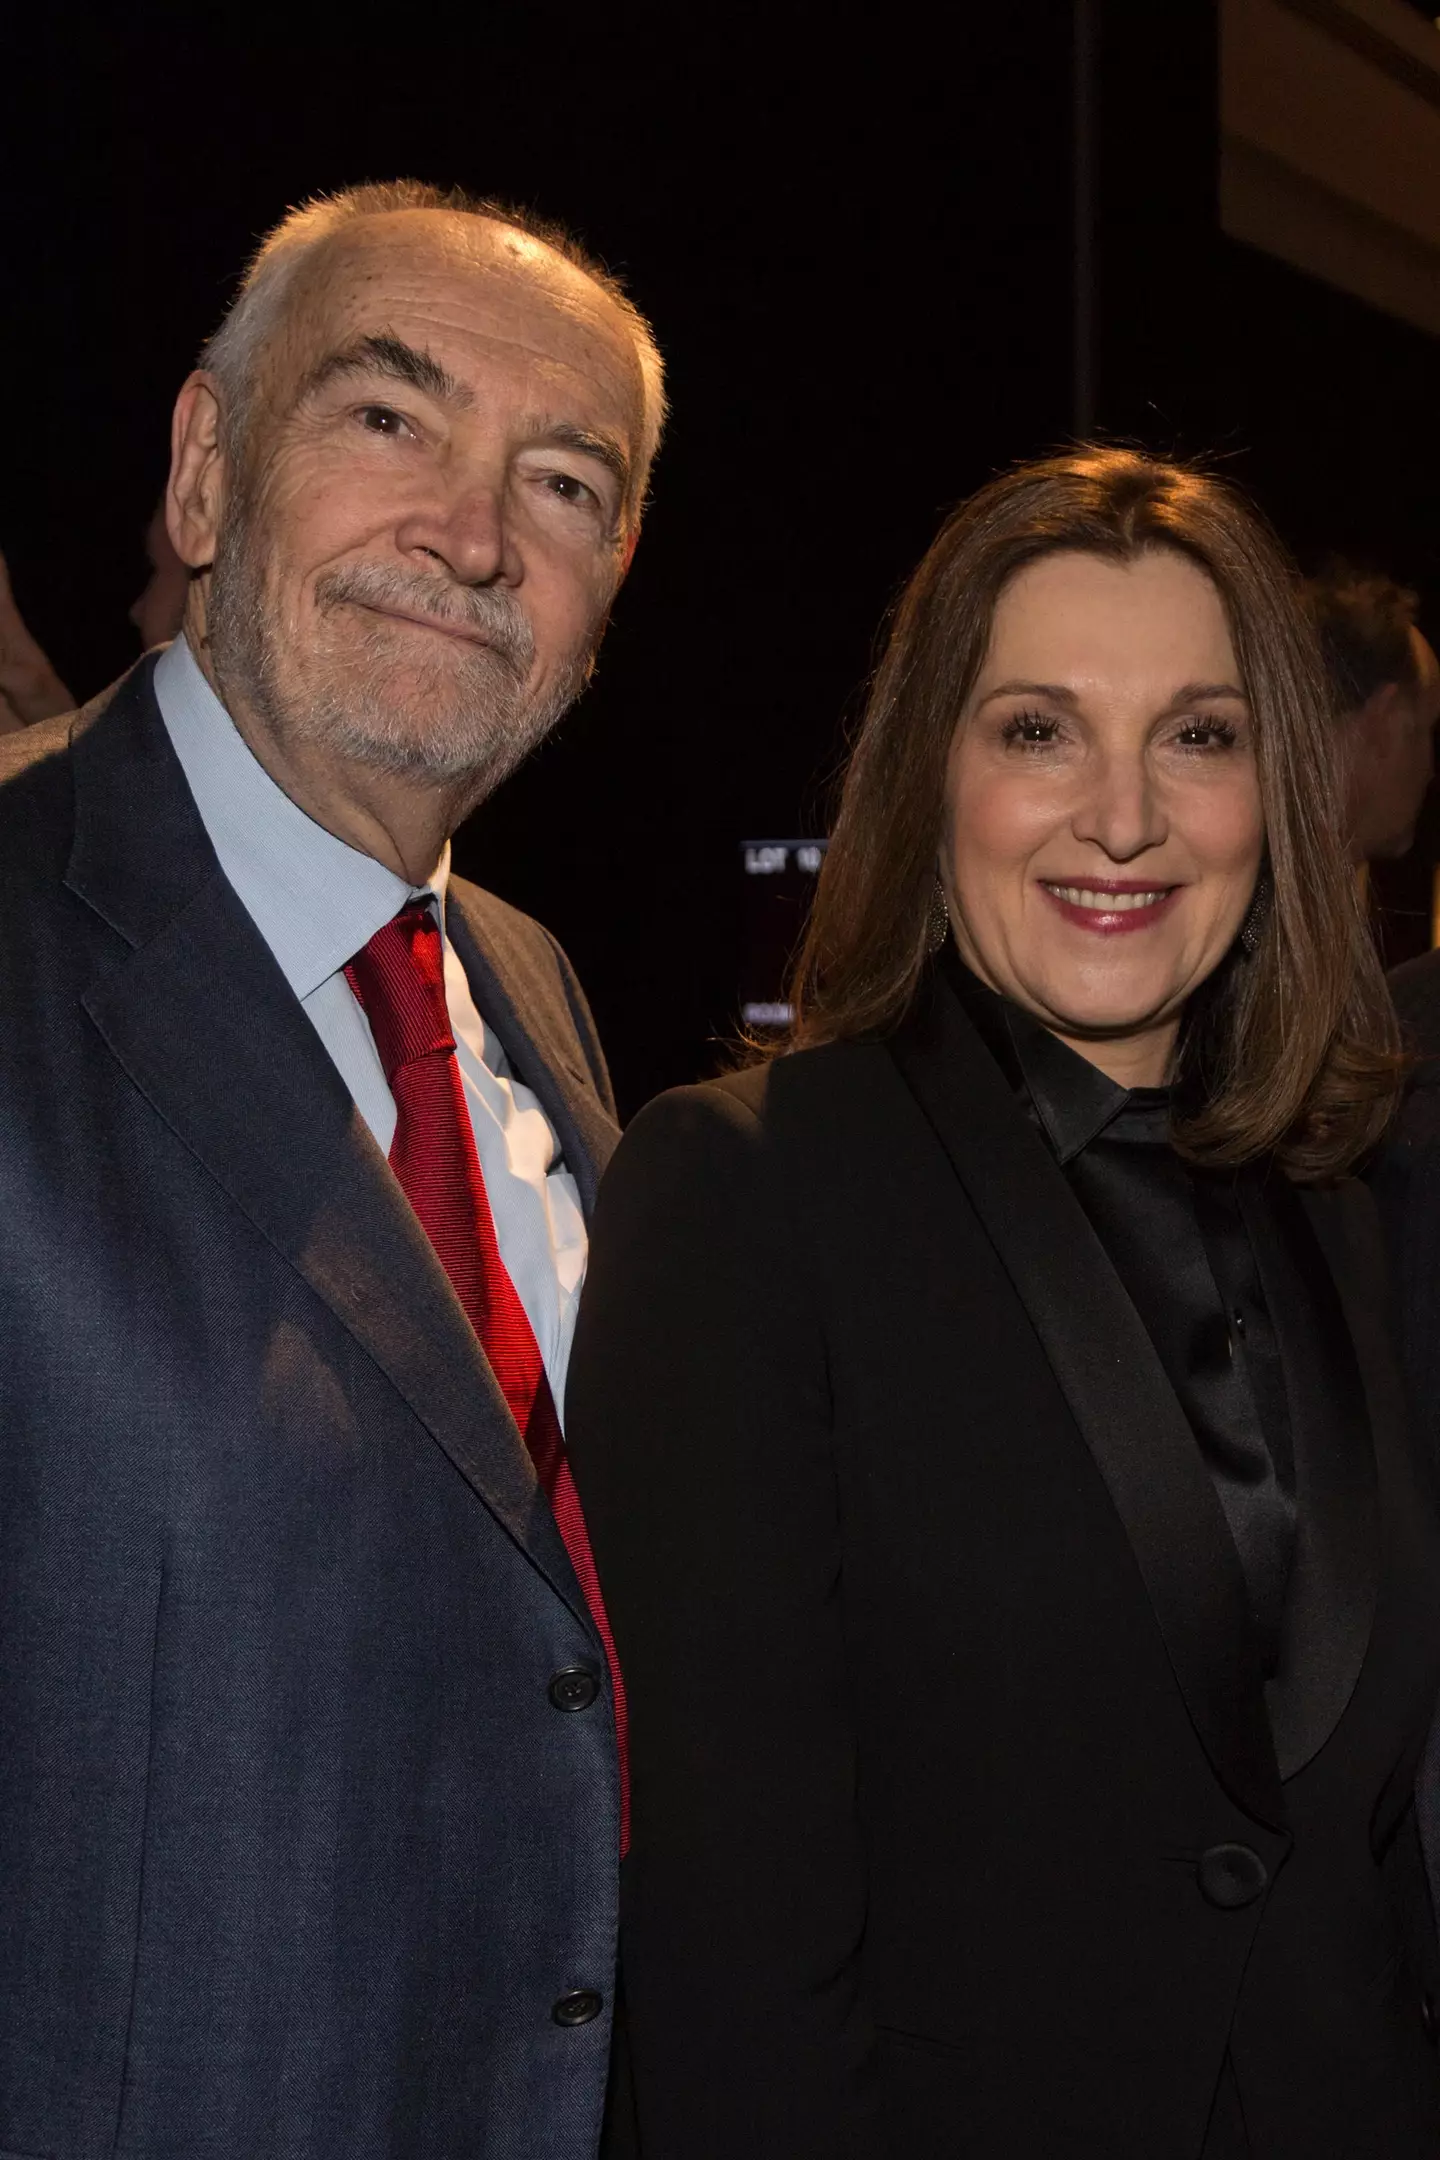 James Bond producers Michael G. Wilson and Barbara Broccoli.